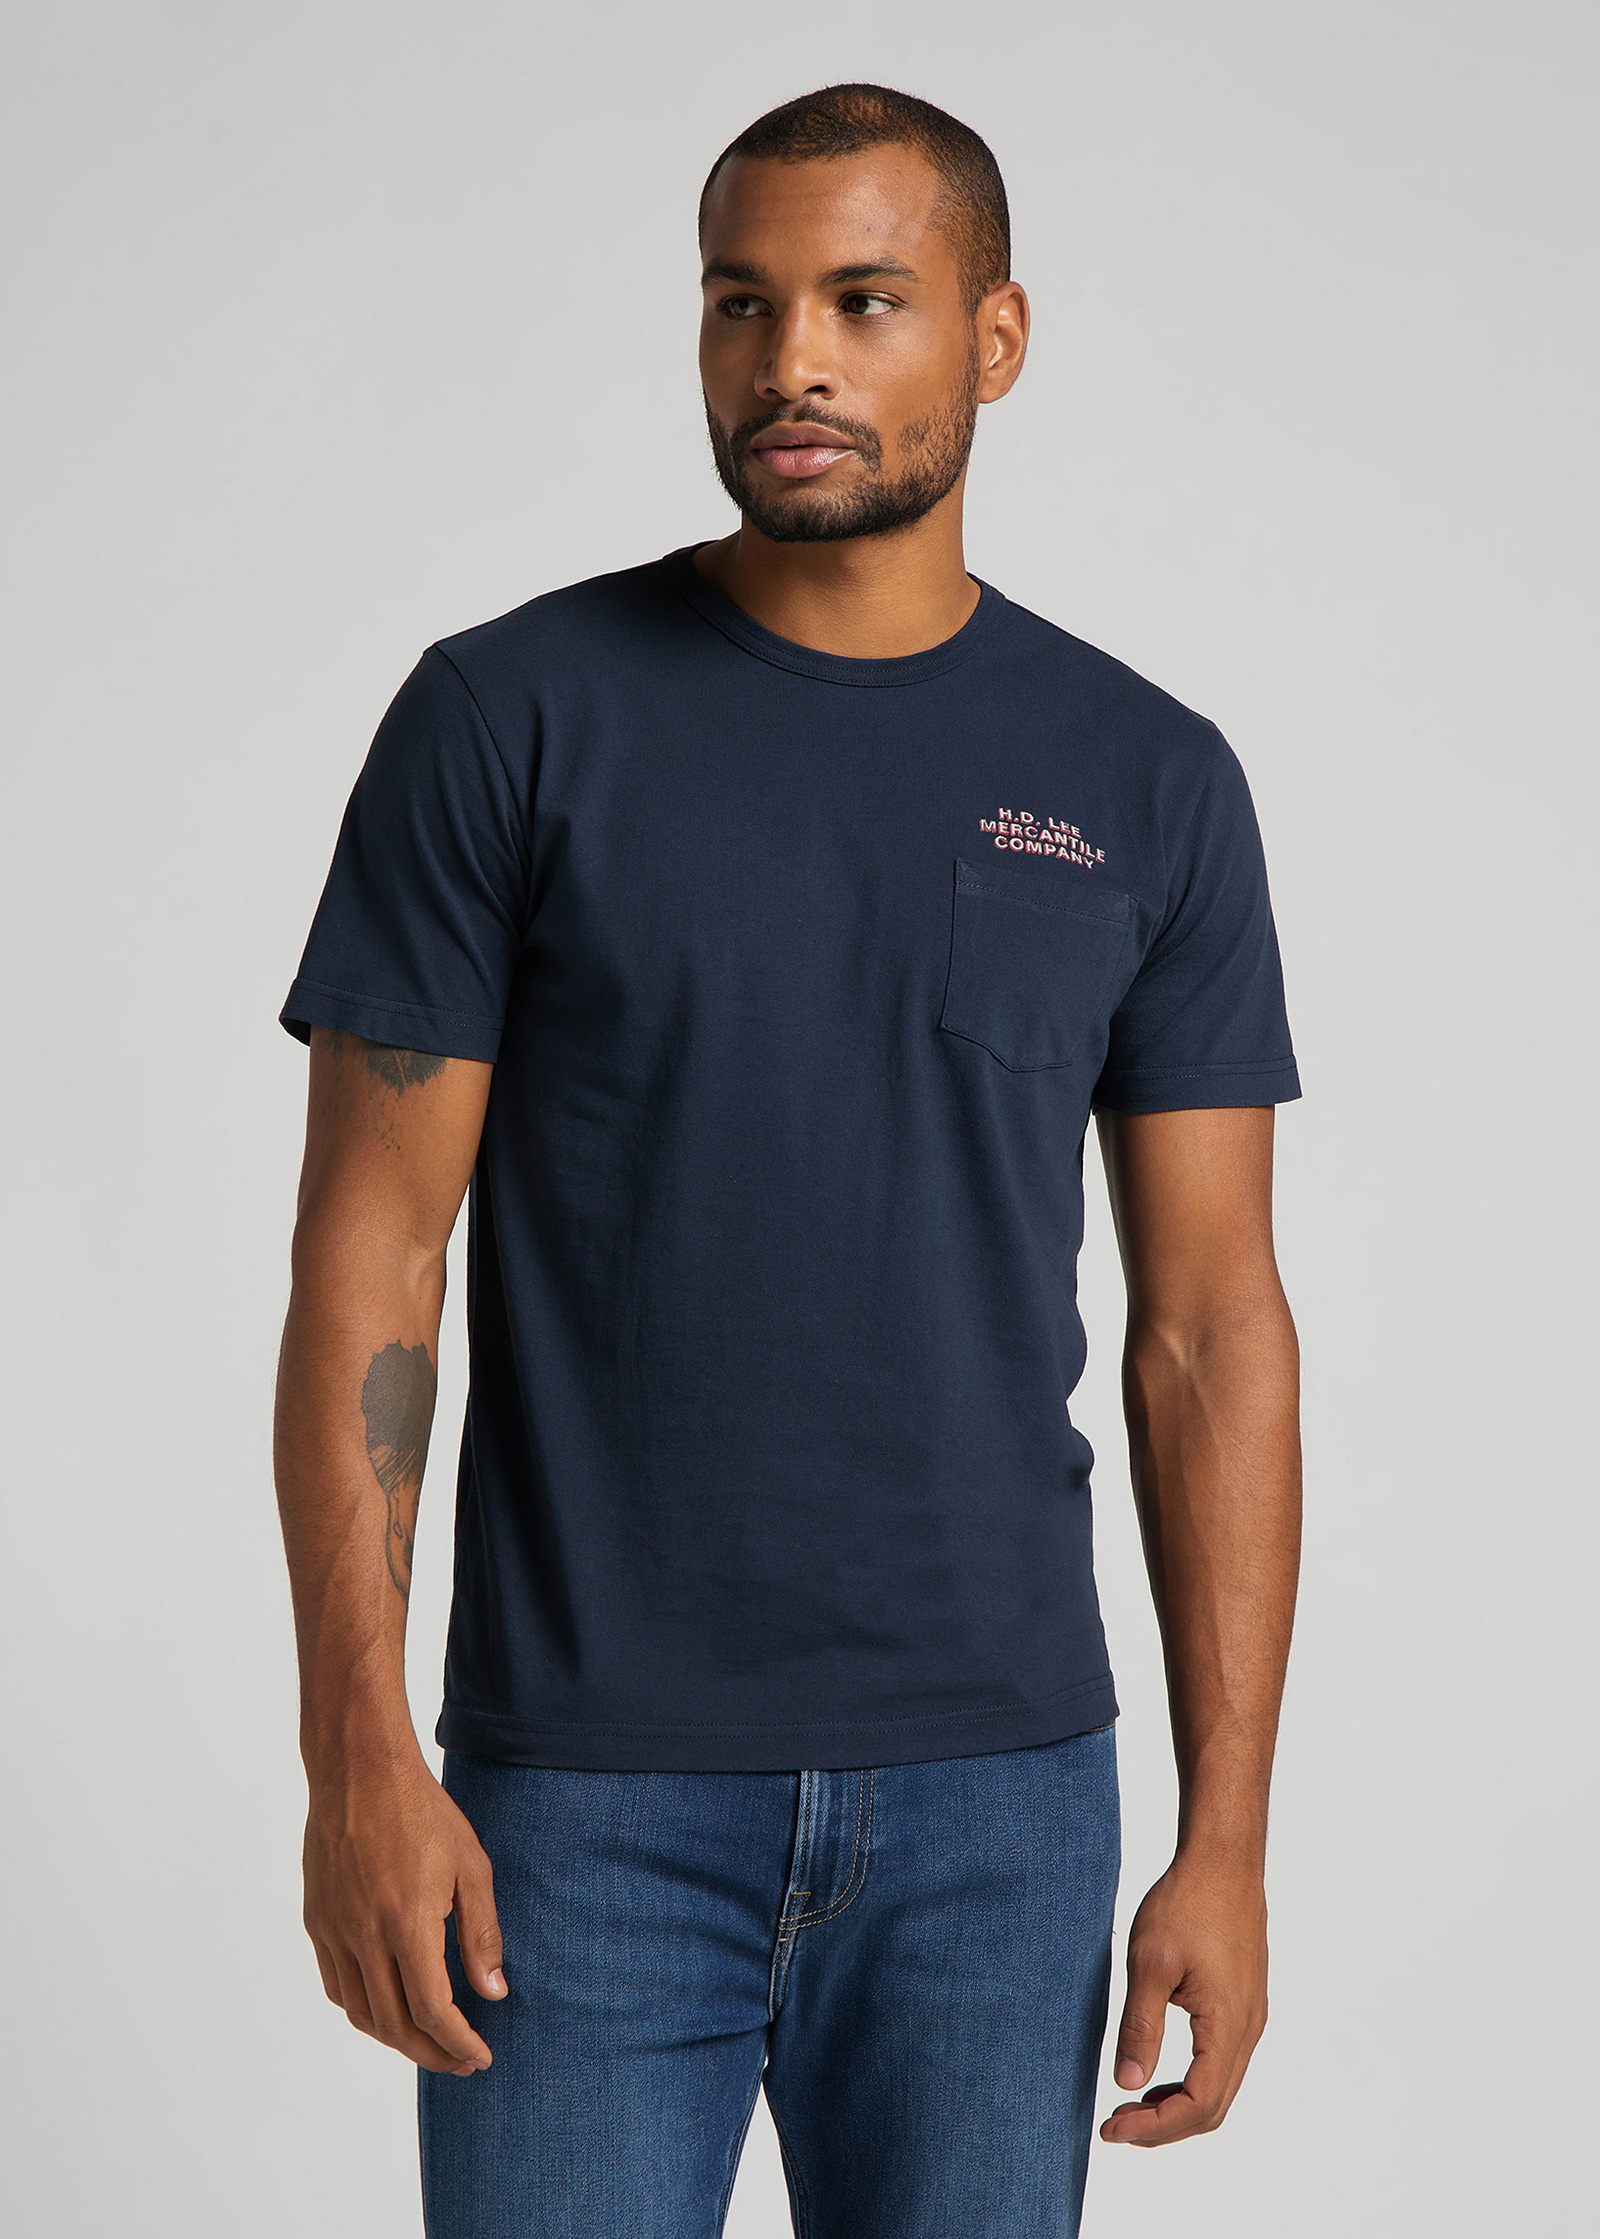 Men's T-shirt Lee® Poster Tee - Navy L63EFE35 / Navy blue